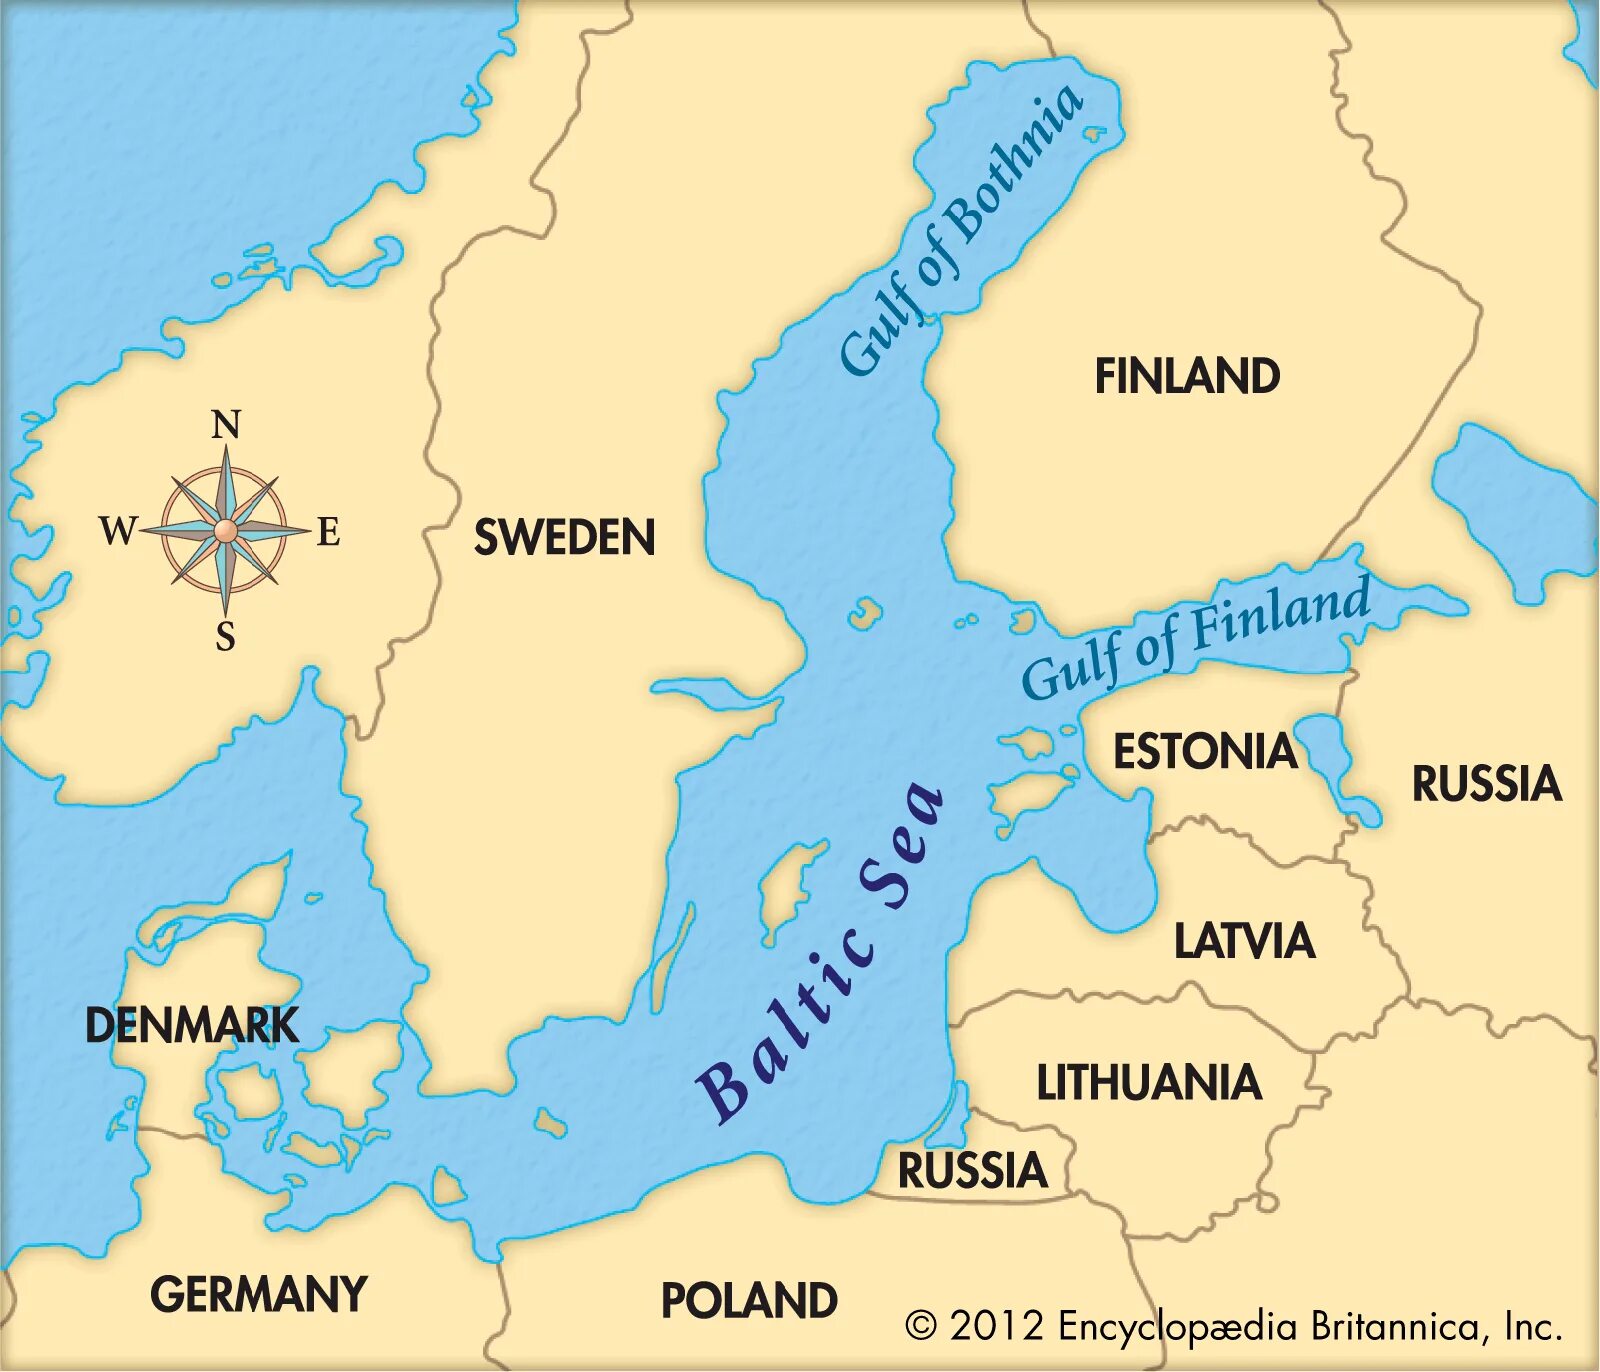 Какая страна расположена на балтийском море. Балтийское море на карте. Границы Балтийского моря на контурной карте. Карта Балтики и финского залива. Балтийское море на карте Европы.